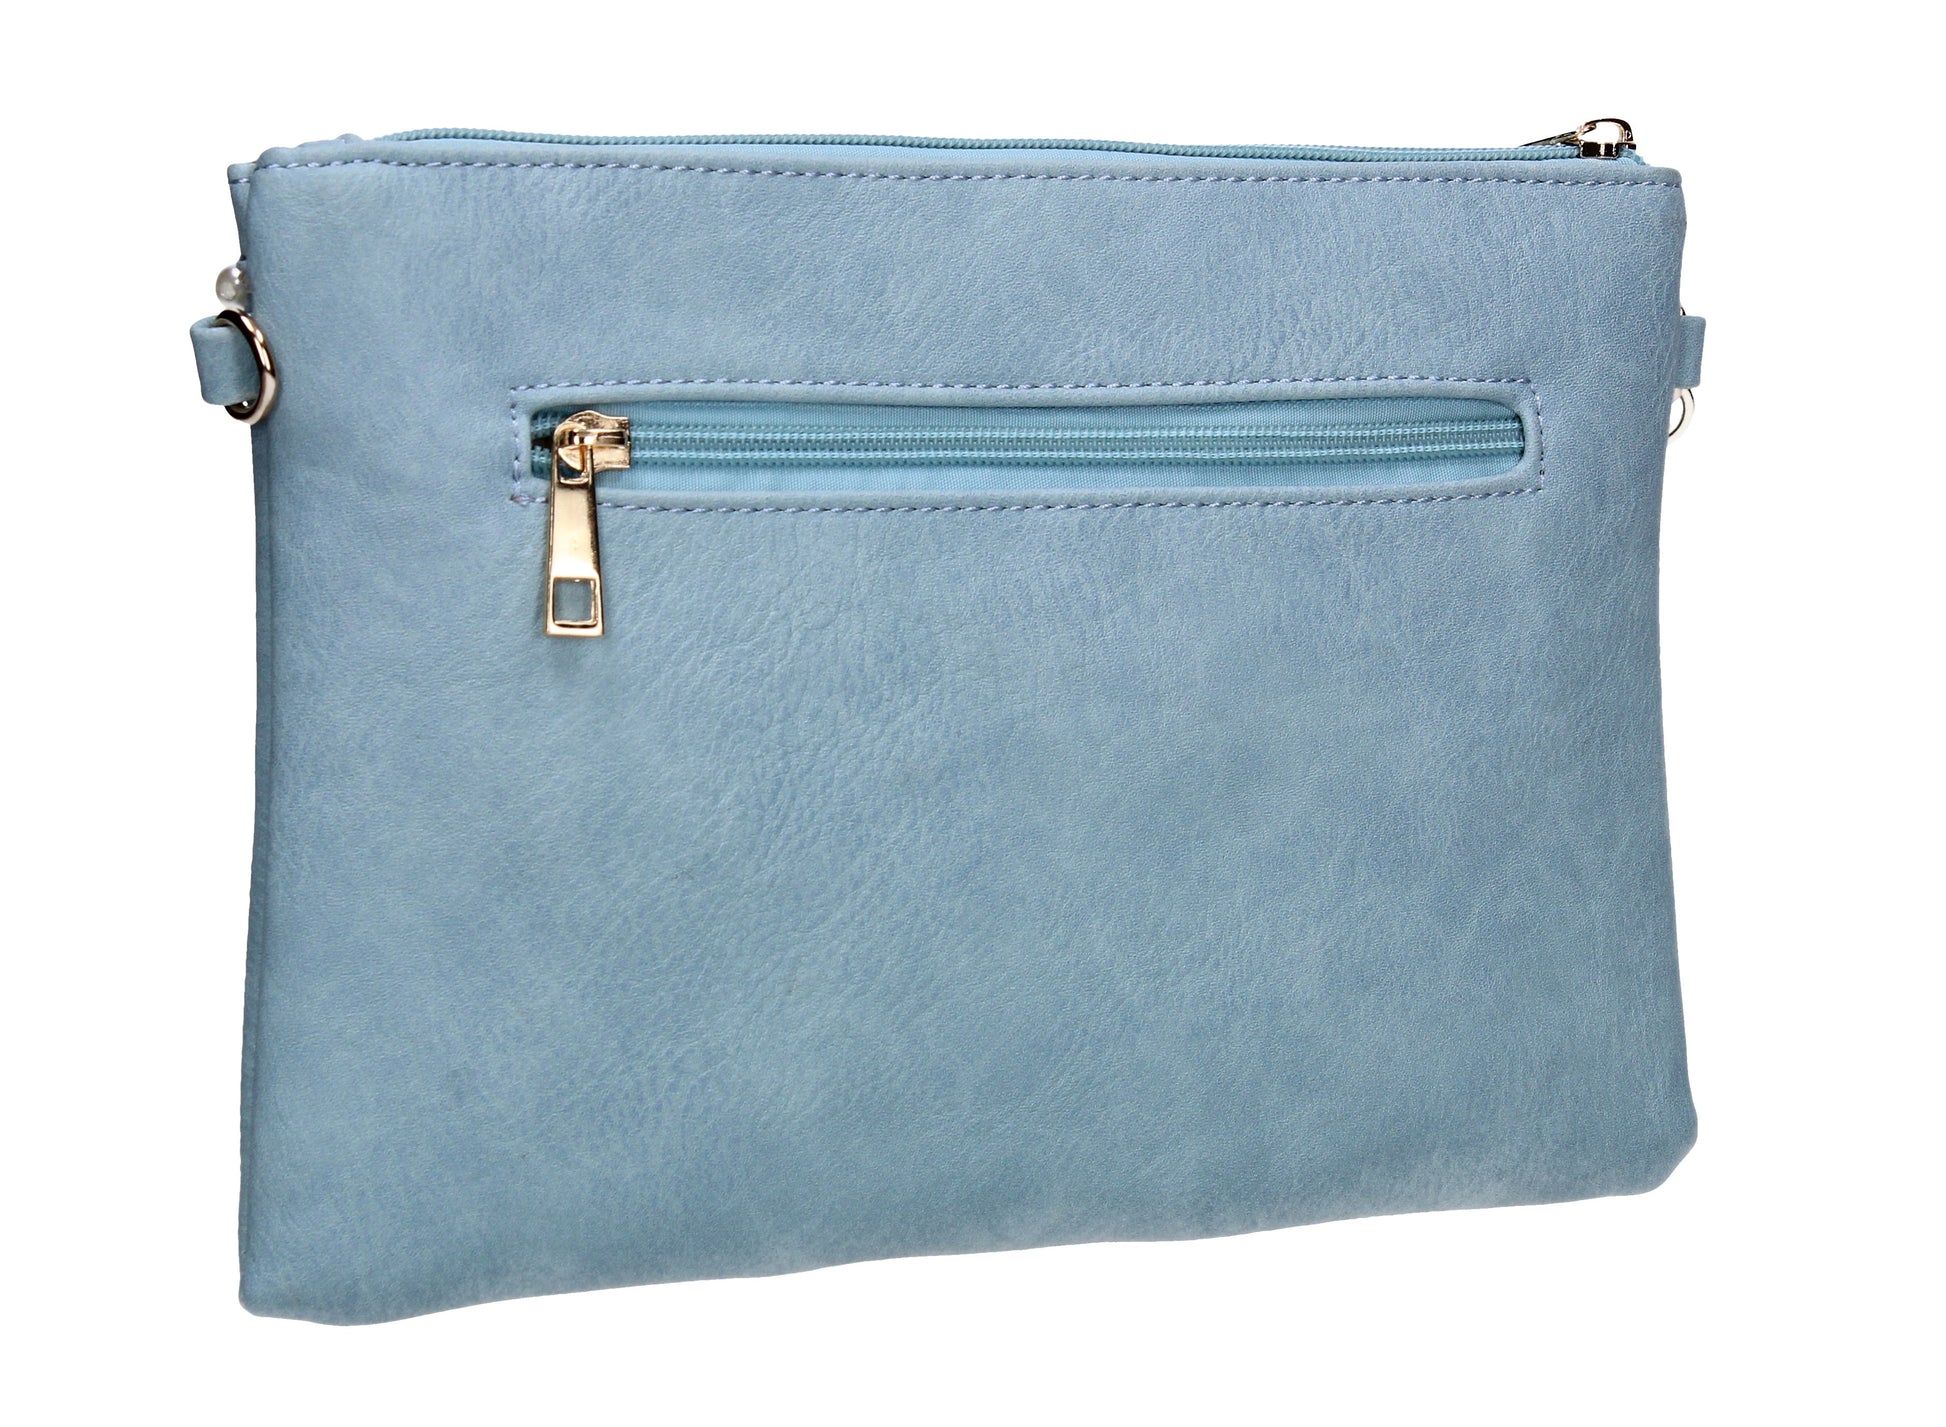 SWANKYSWANS Delilah Clutch Bag Quay Blue Cute Cheap Clutch Bag For Weddings School and Work